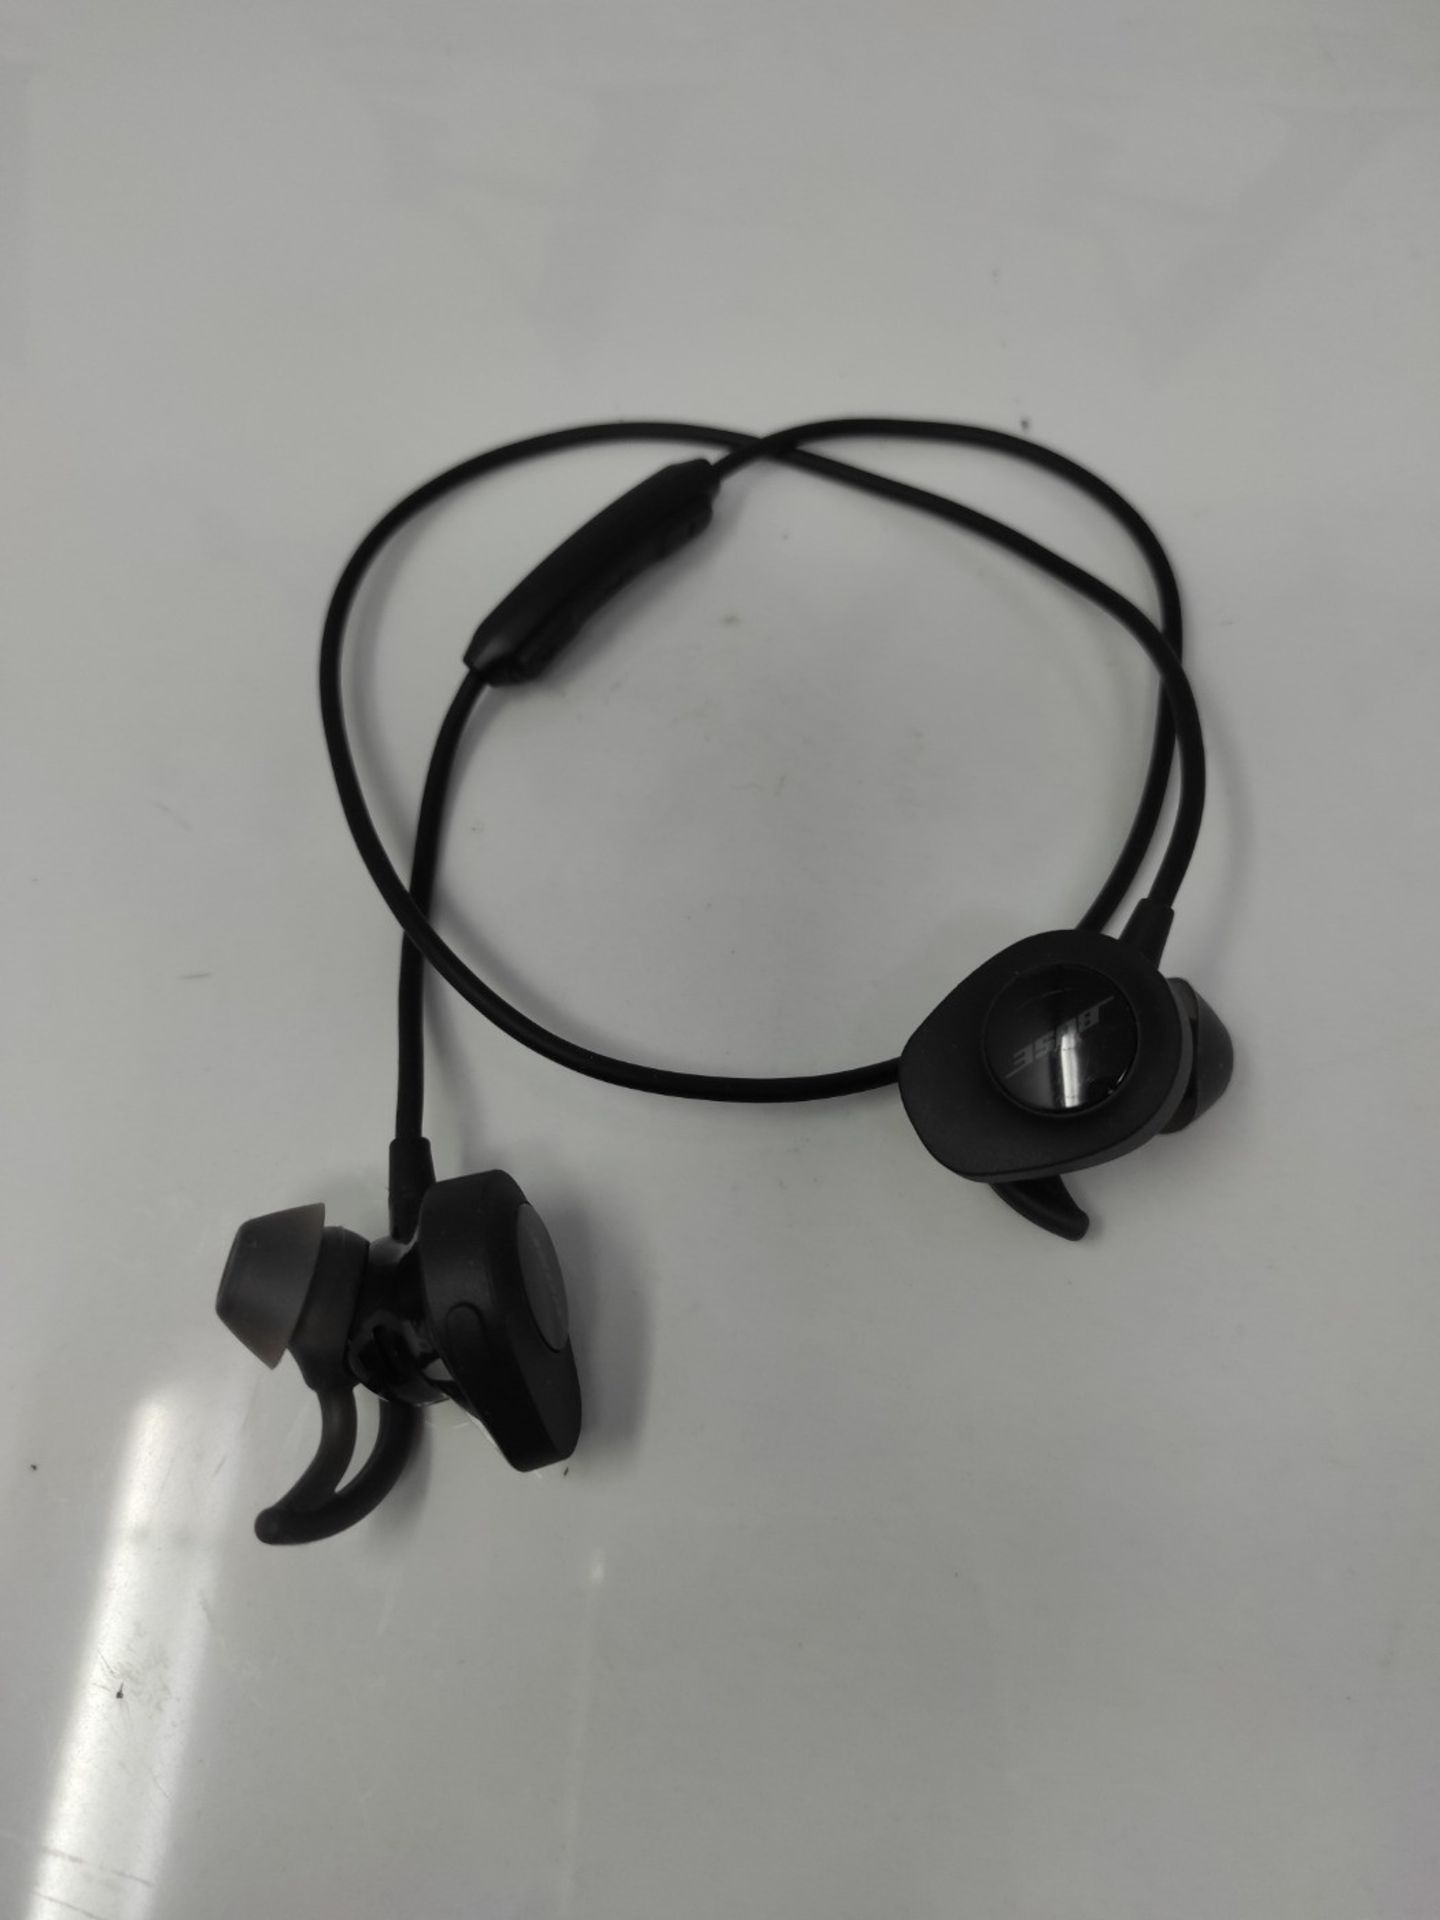 RRP £106.00 Bose 761529-0010 SoundSport Wireless Headphones - Black, 2.9 x 2.5 x 2.9 cm - Image 3 of 3